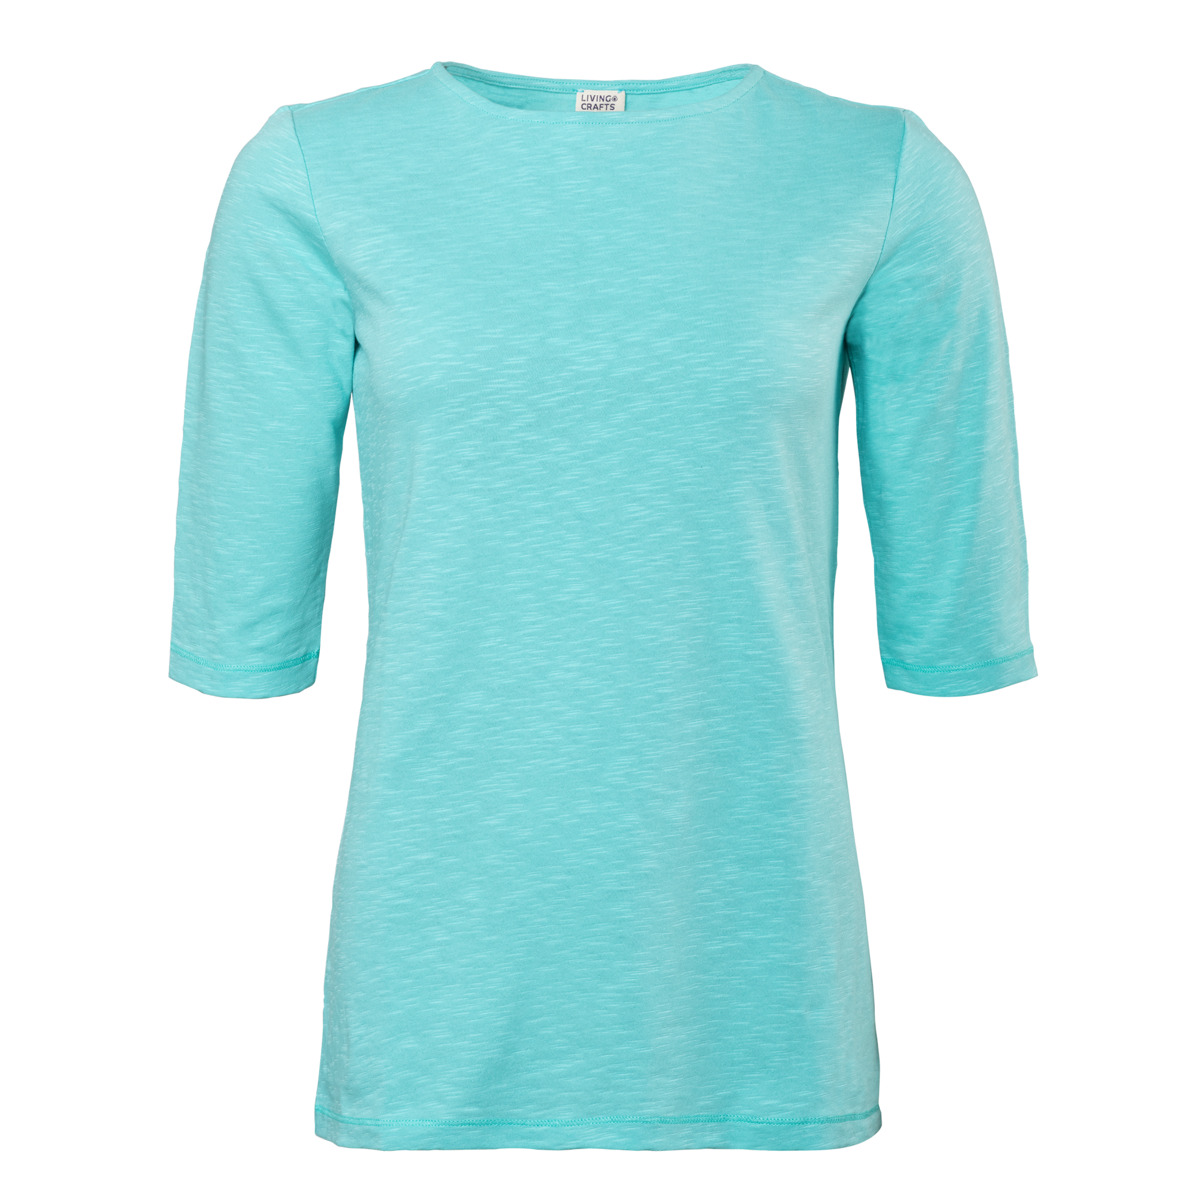 Turquoise T-shirt, CHLOE